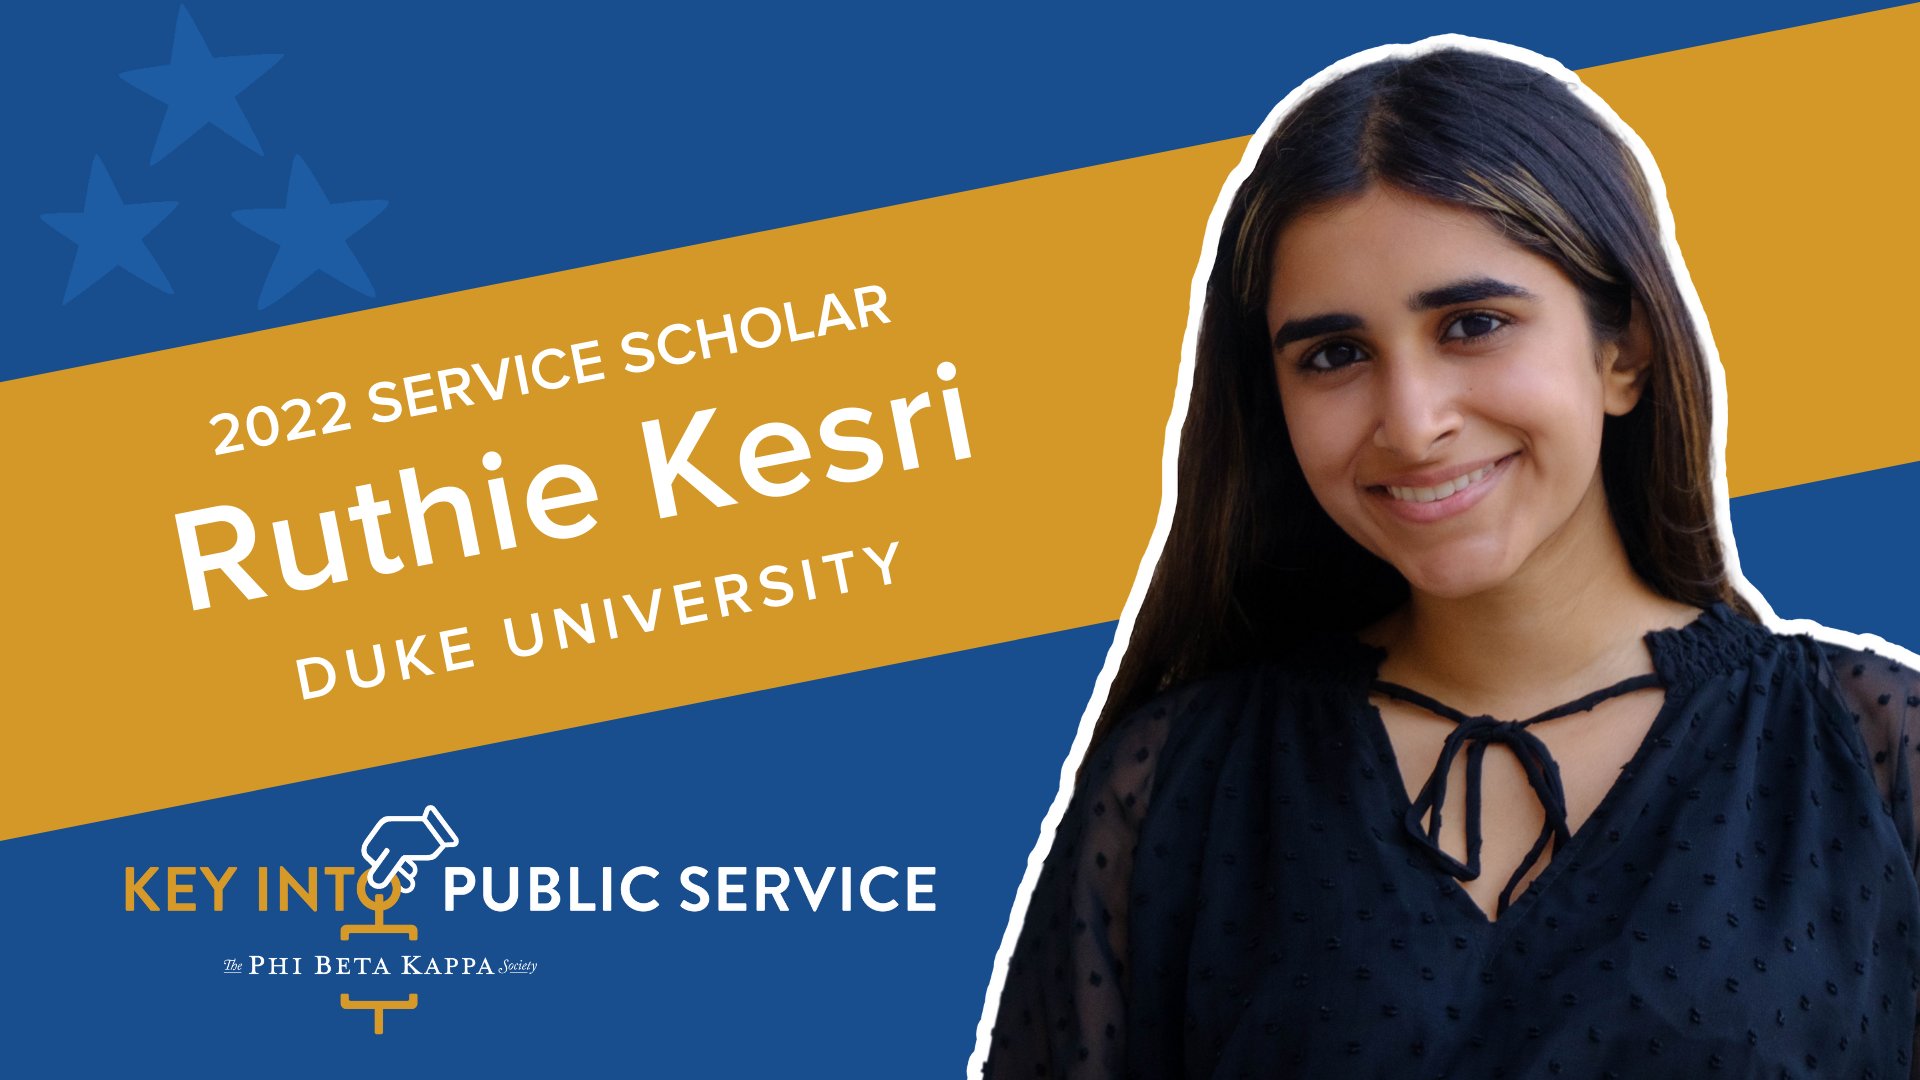 تويتر \ Phi Beta Kappa على تويتر: "Meet Ruthie Kesri, selected to receive the #PBKPublicService Scholarship. Ruthie is a rising junior at @DukeU majoring in #PoliticalScience and #GlobalHealth: https://t.co/bUojR8bgWb"